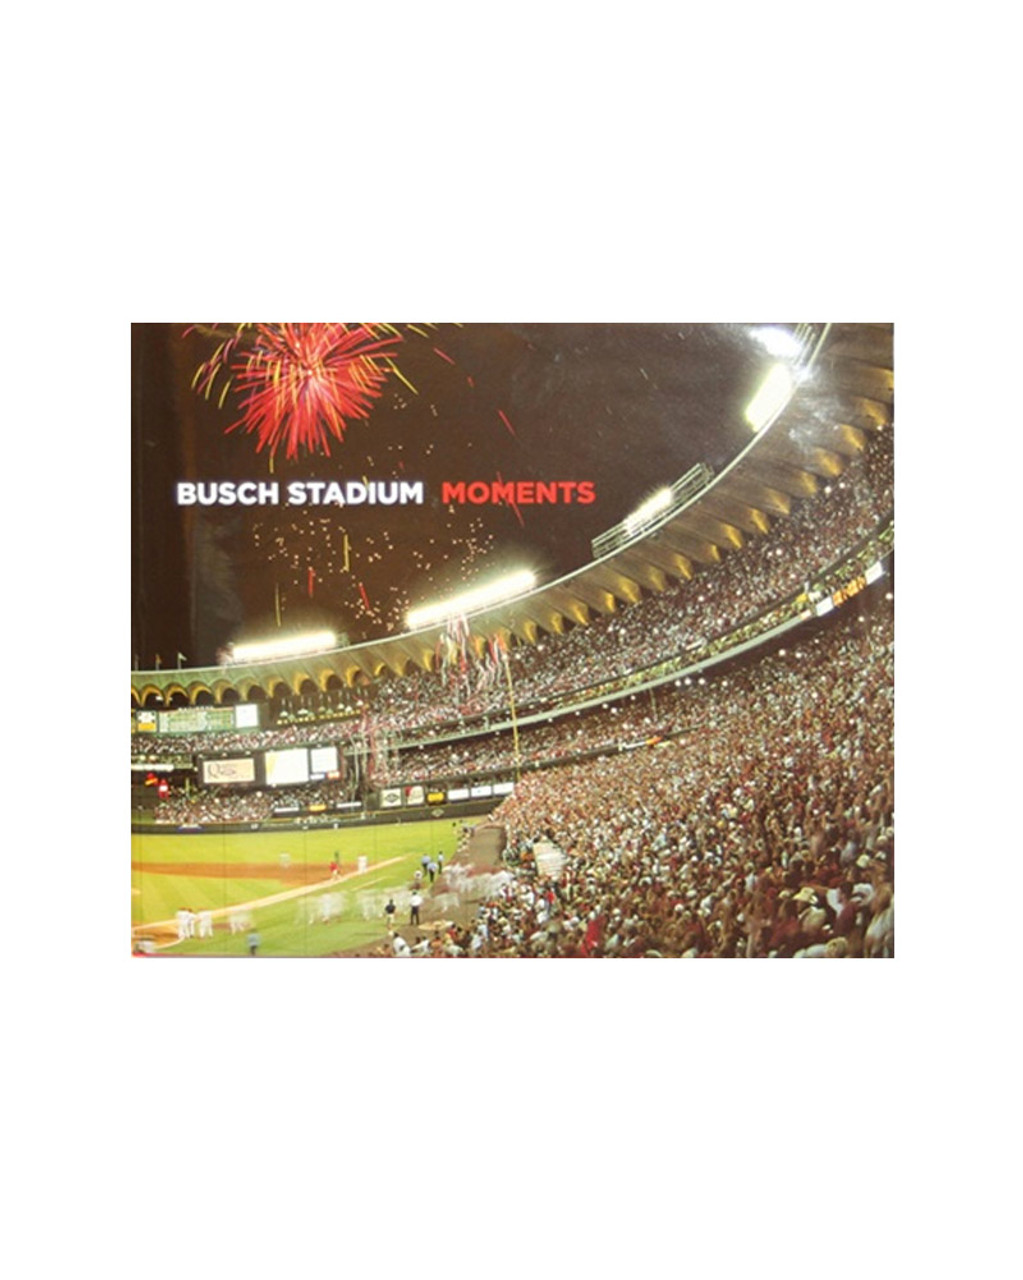 Memorable games: Busch Stadium